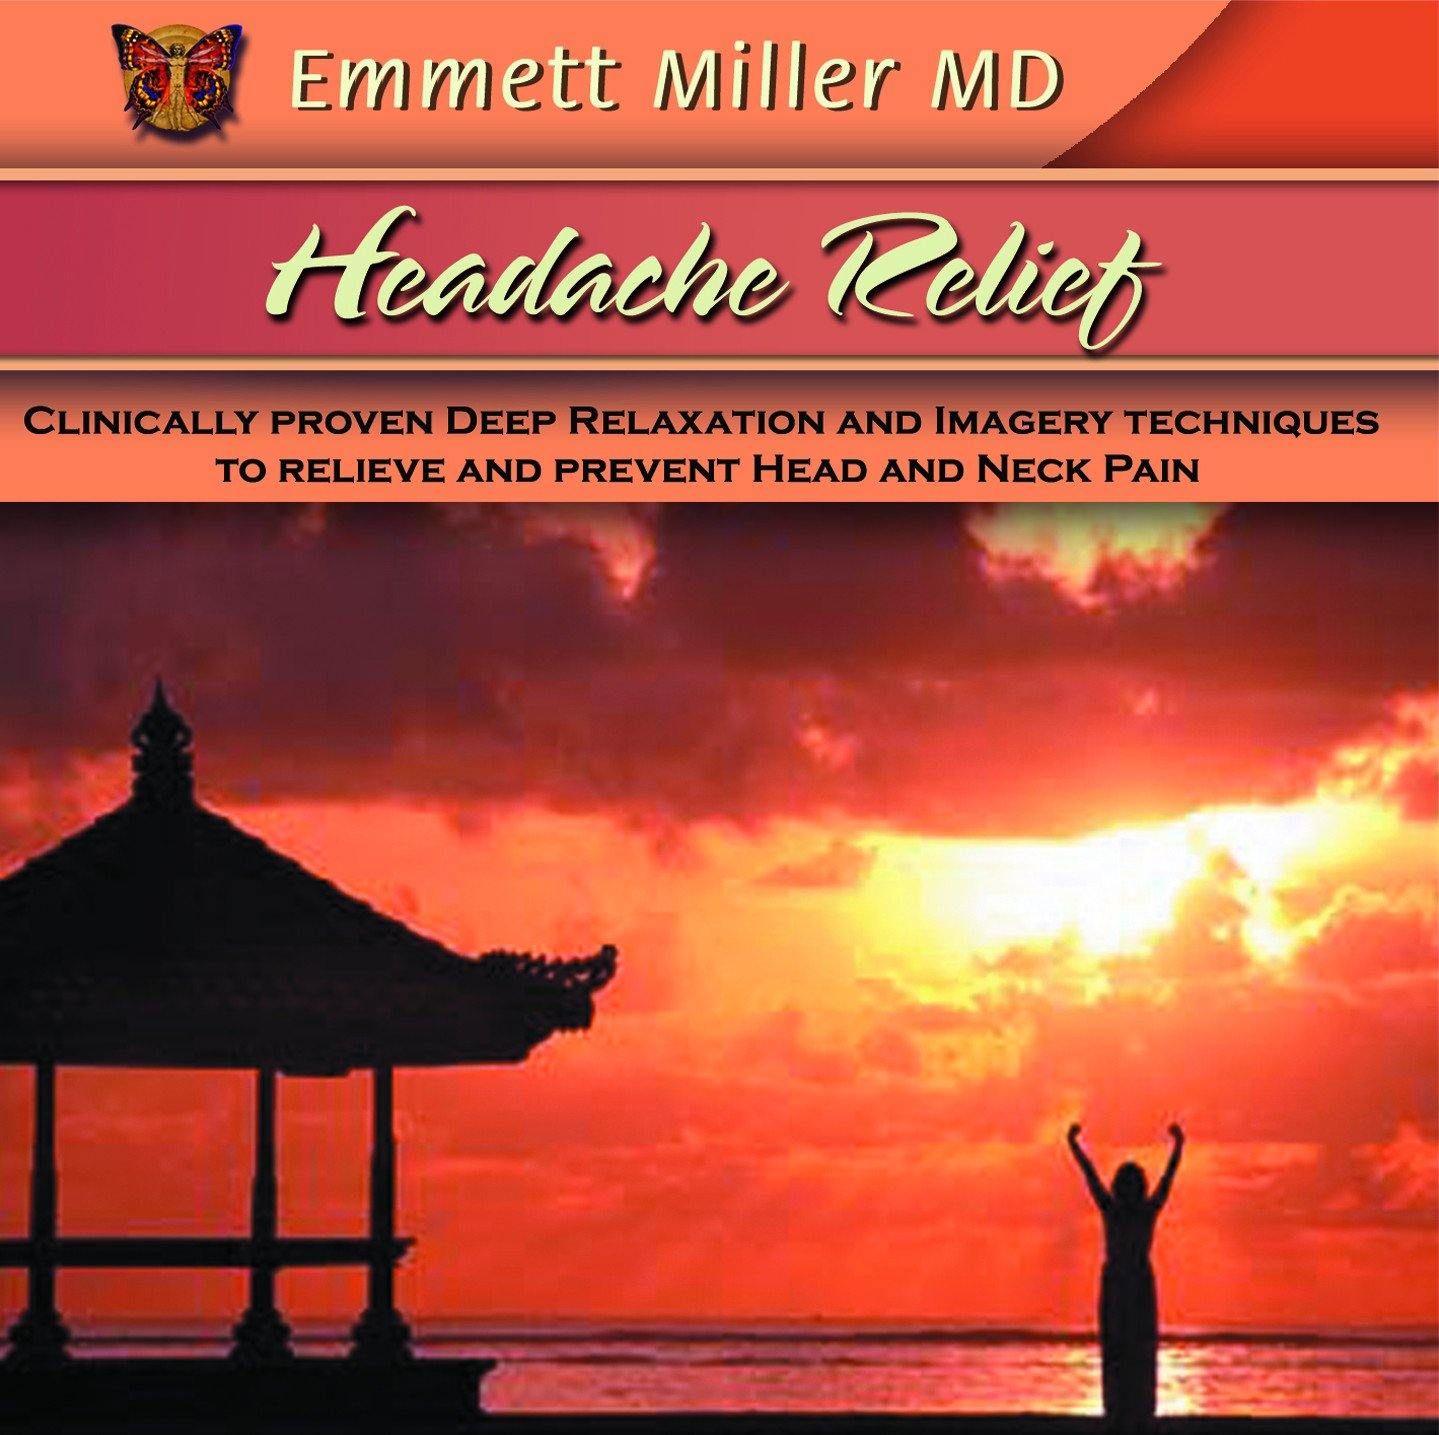 Headache Relief with Dr. Emmett Miller Audio Program Dr. Emmett Miller - BetterListen!